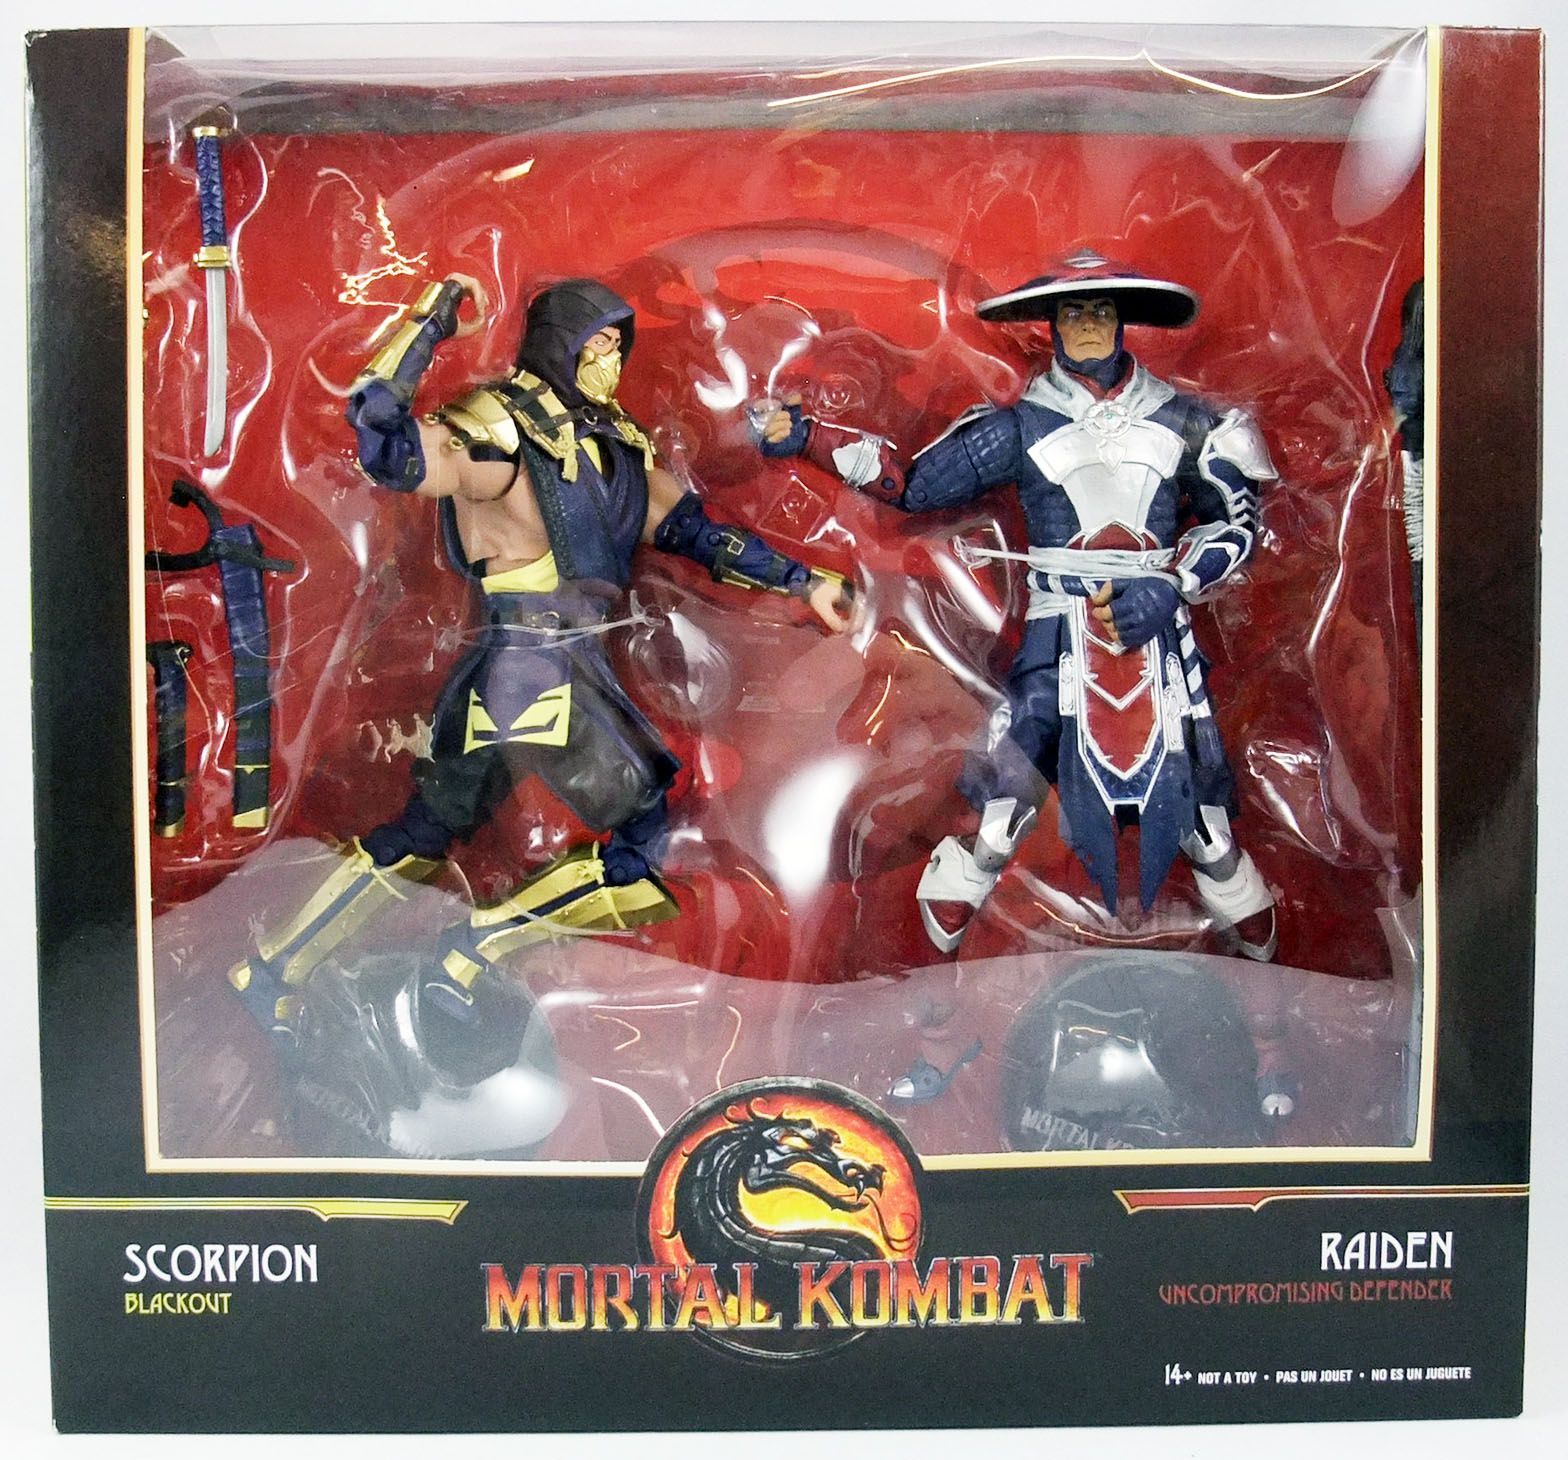 Mortal Kombat 11 McFarlane Toys 7 Inch Figure, Baraka